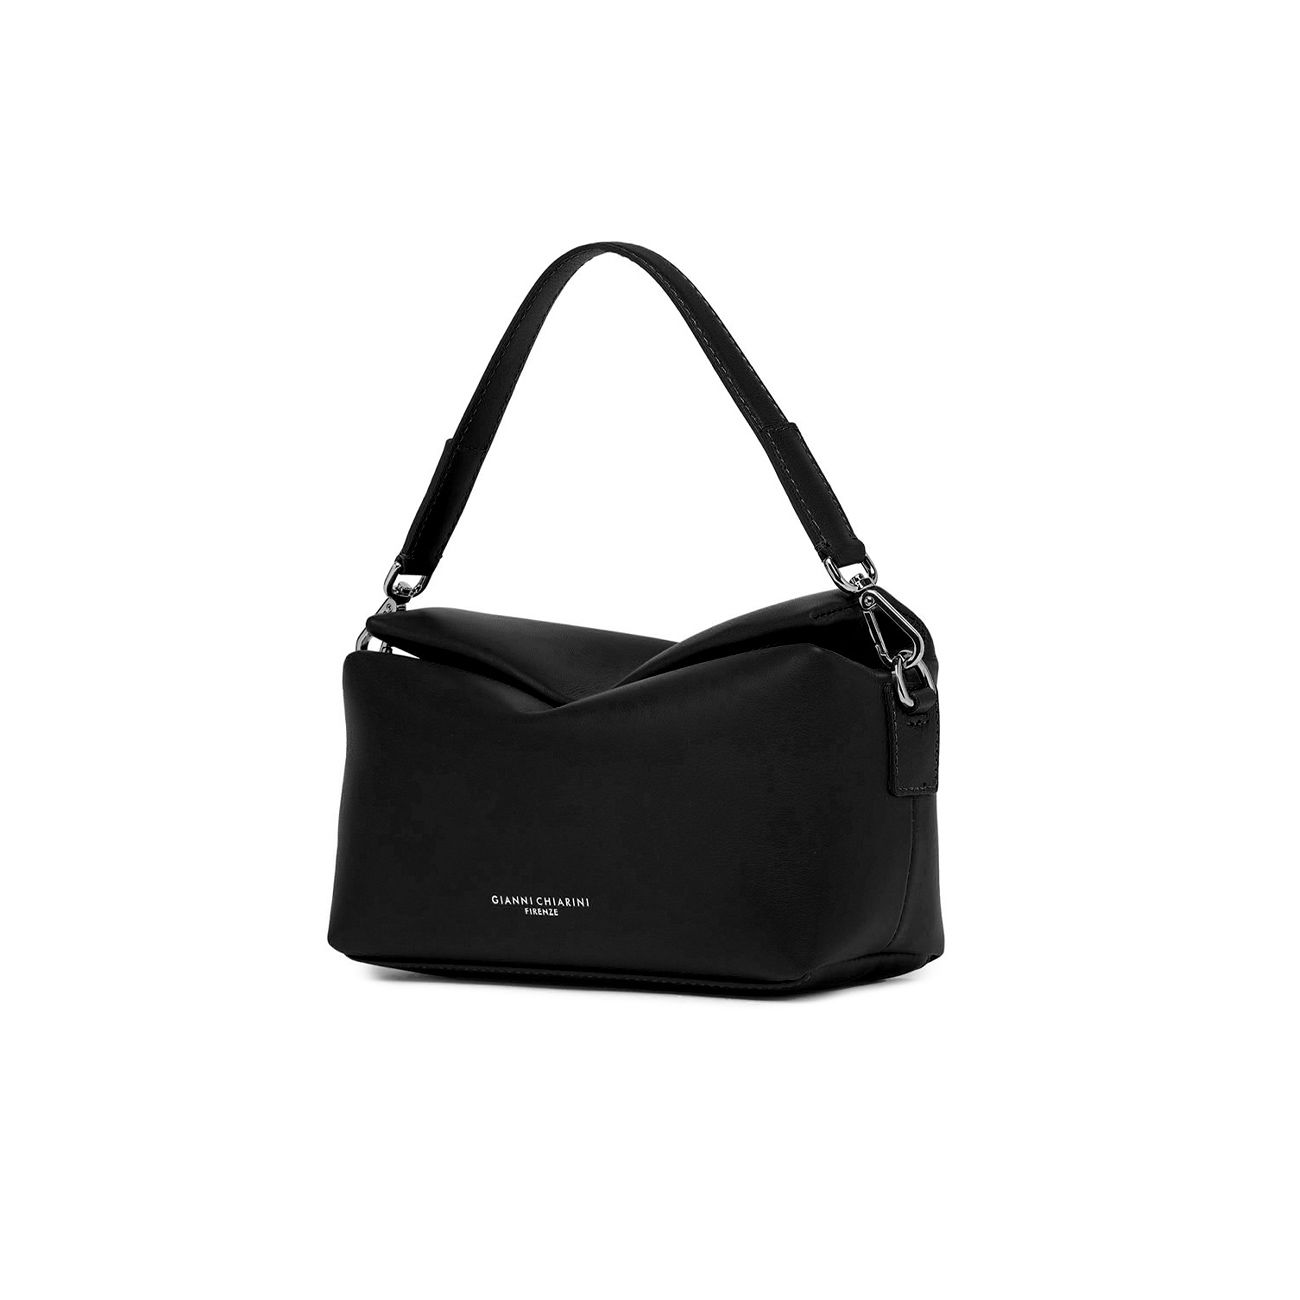 Valentina handbags : Style 901 | Valentina handbags, Bags, Purses and bags